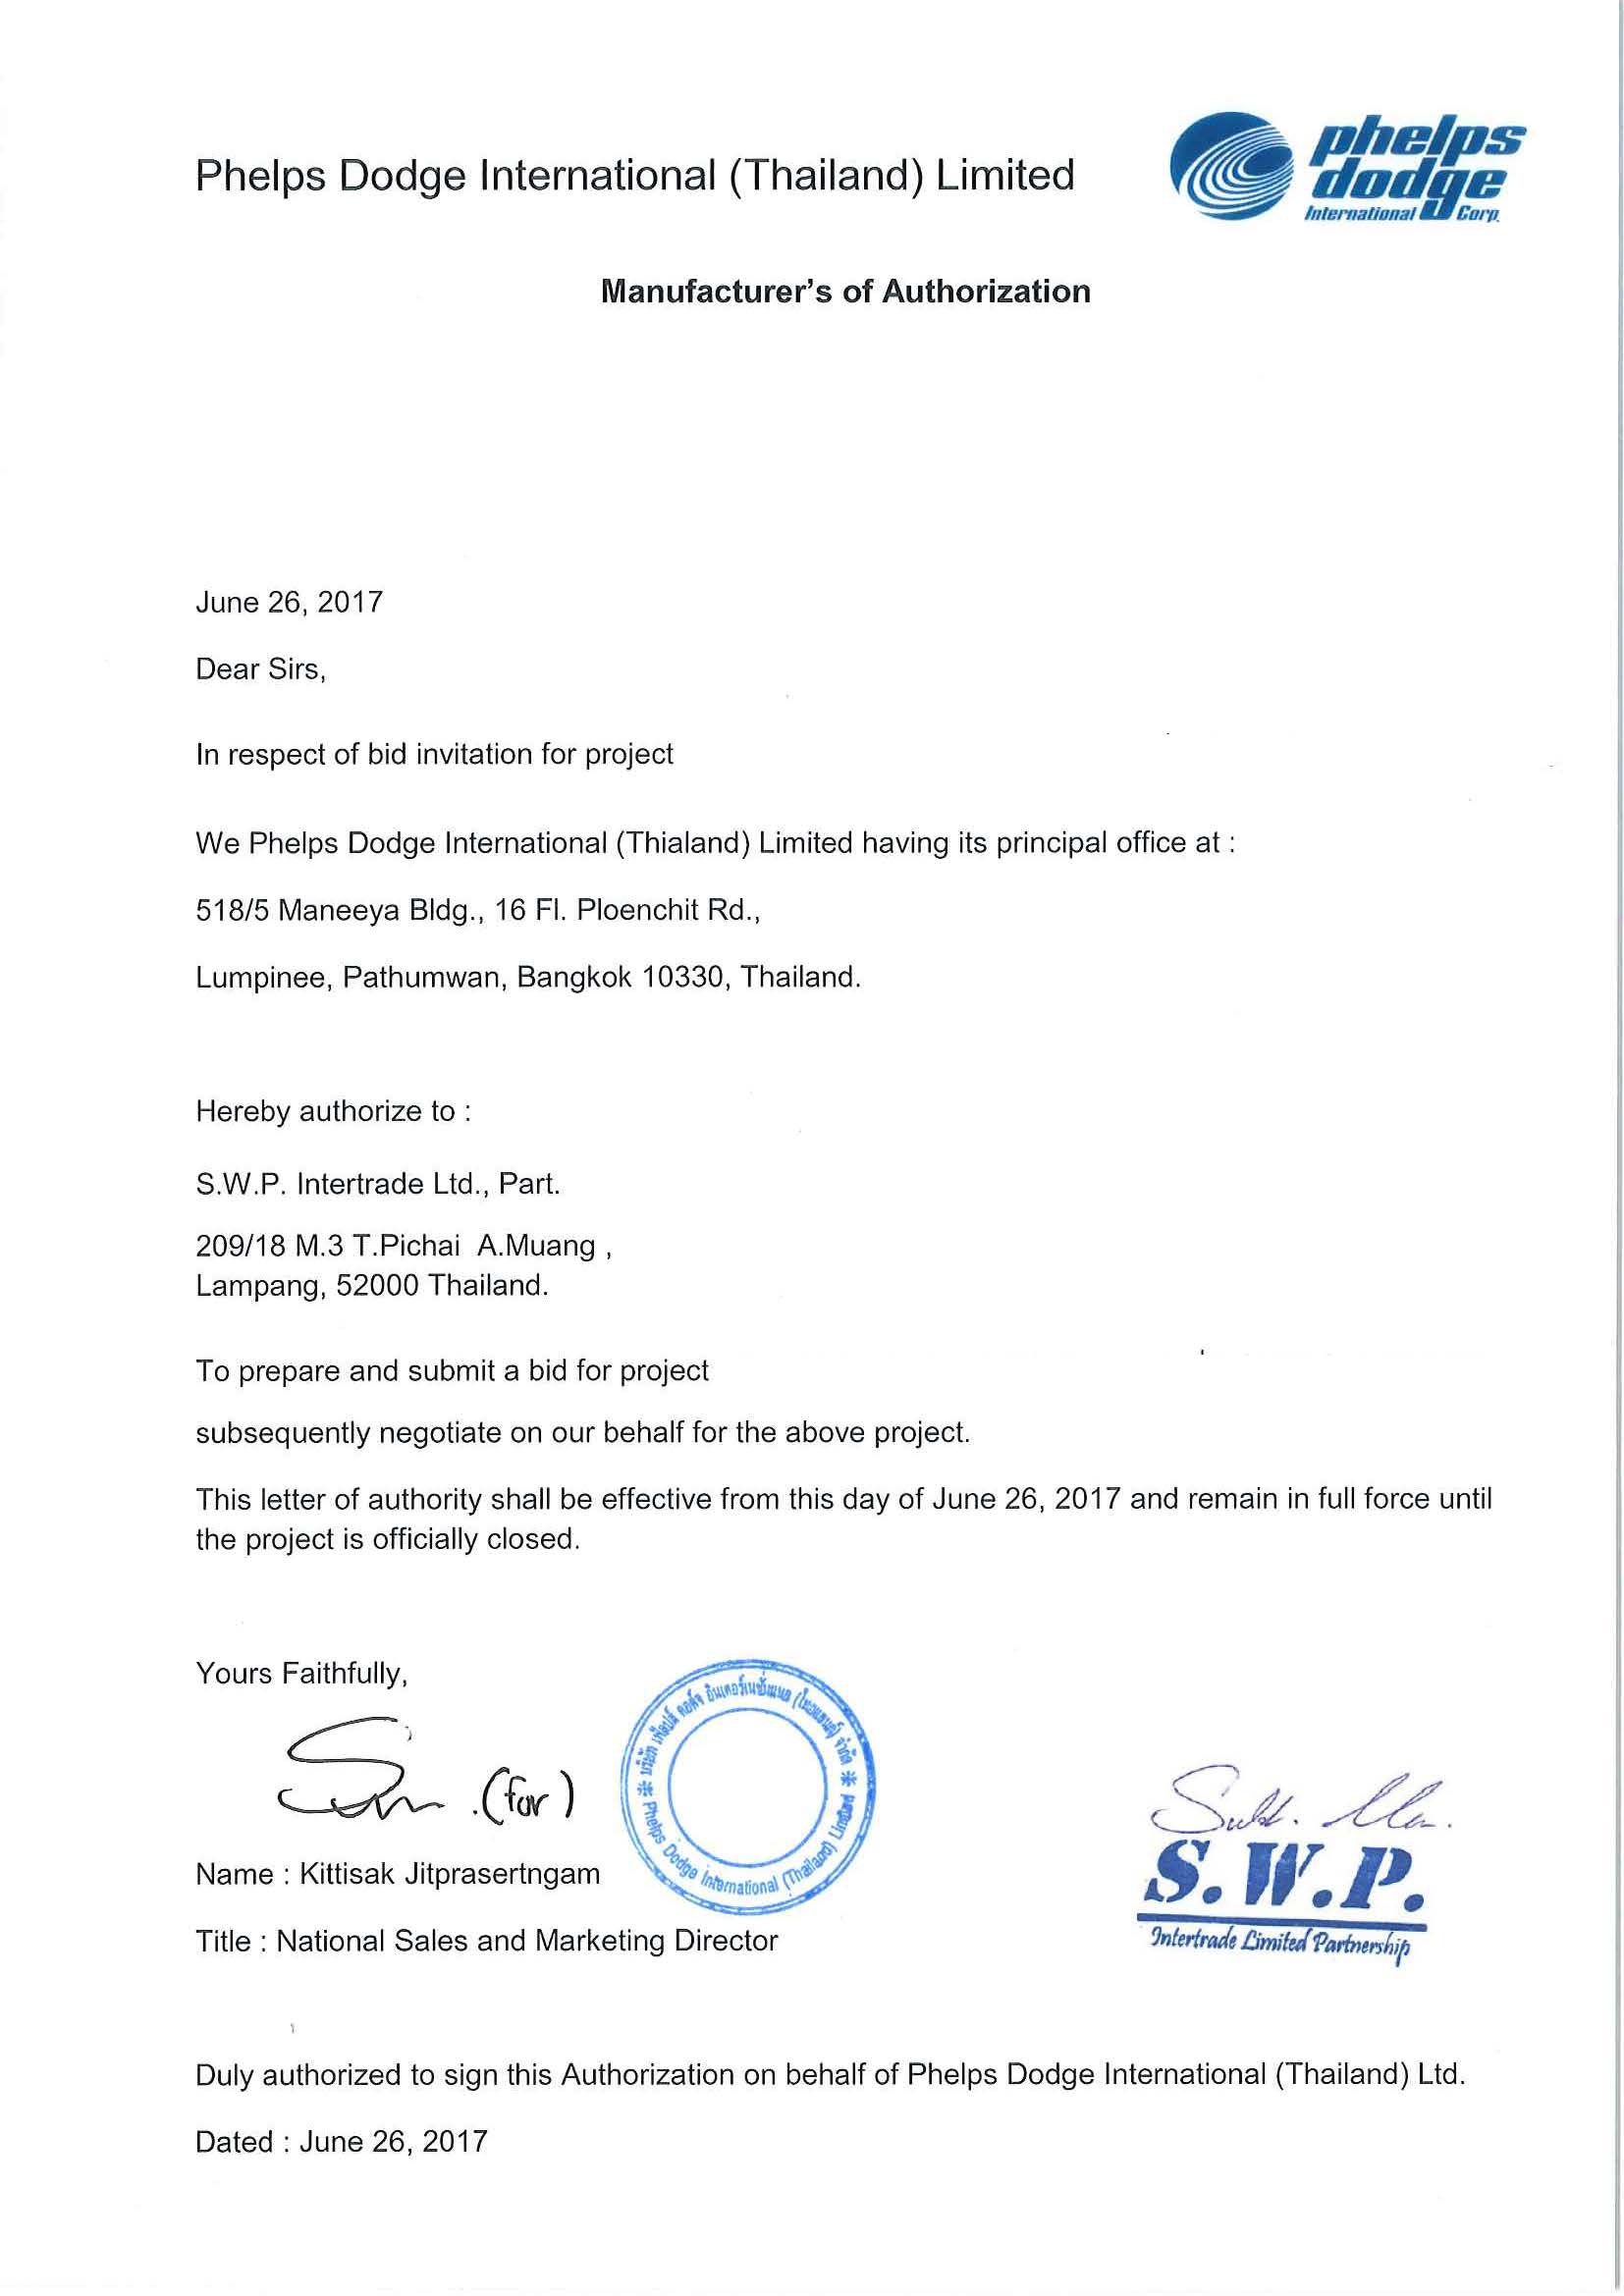 Certificate Phelpsdodge Image